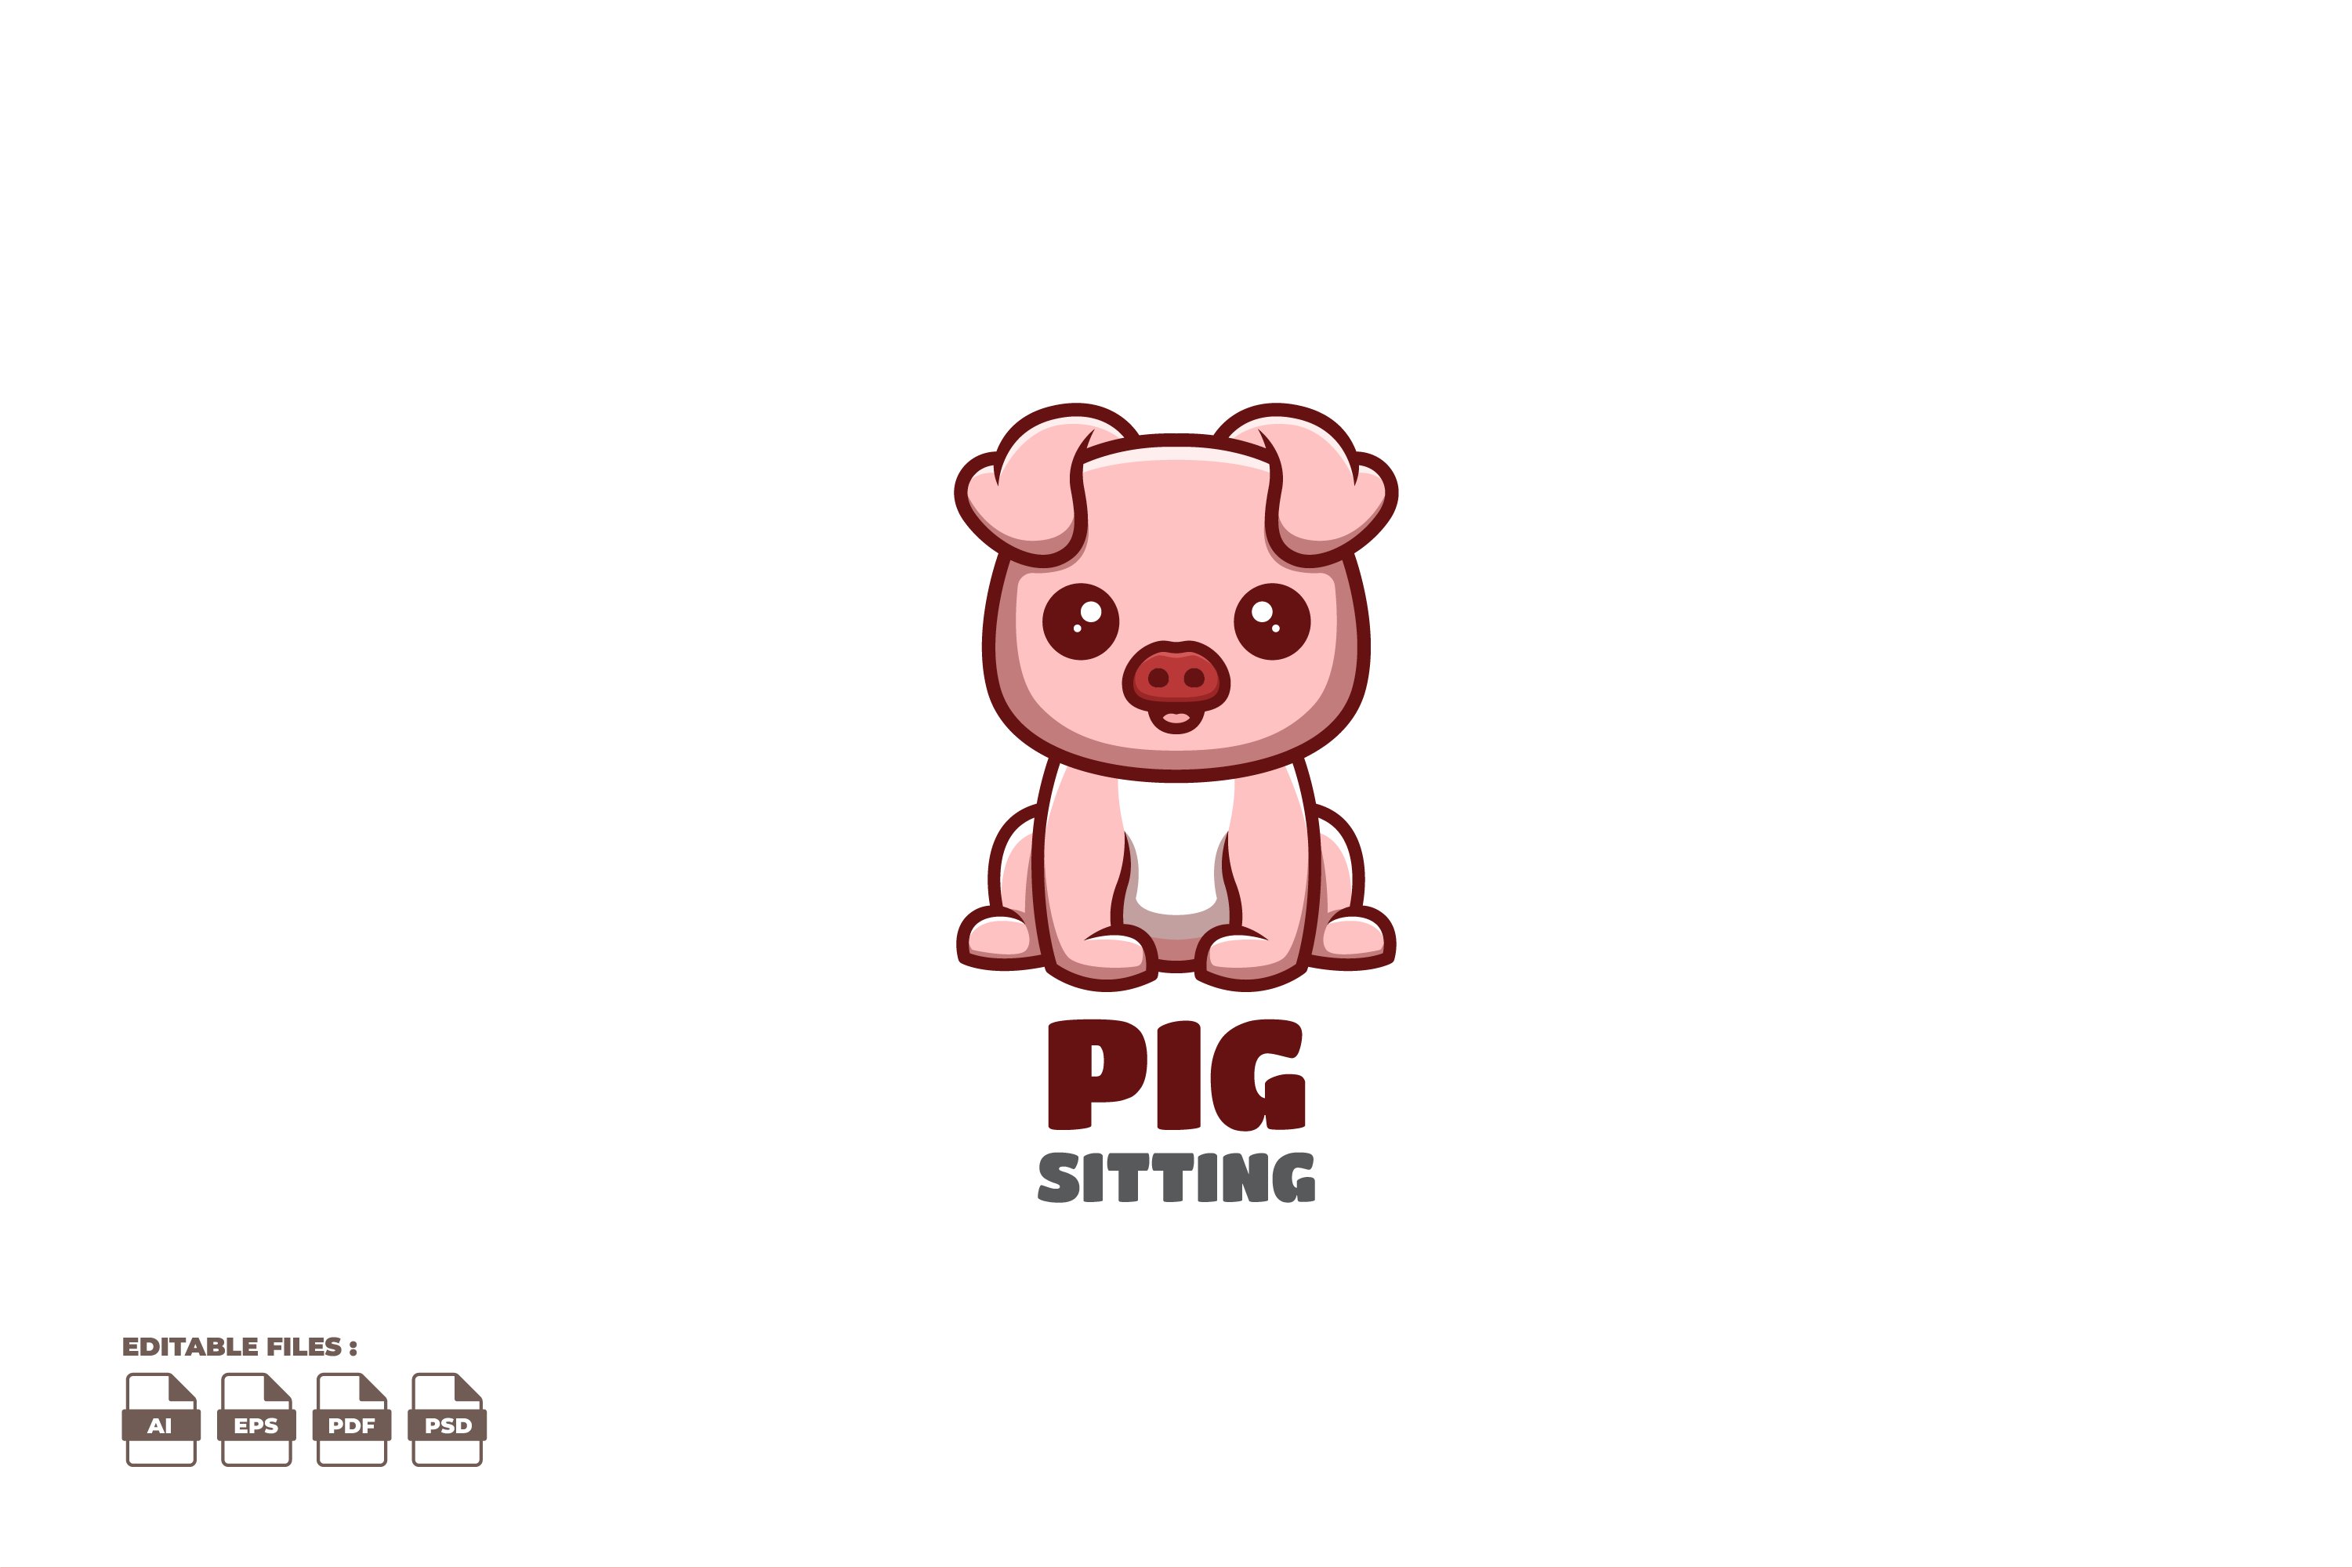 Sitting Pig Cute Mascot Logo cover image.